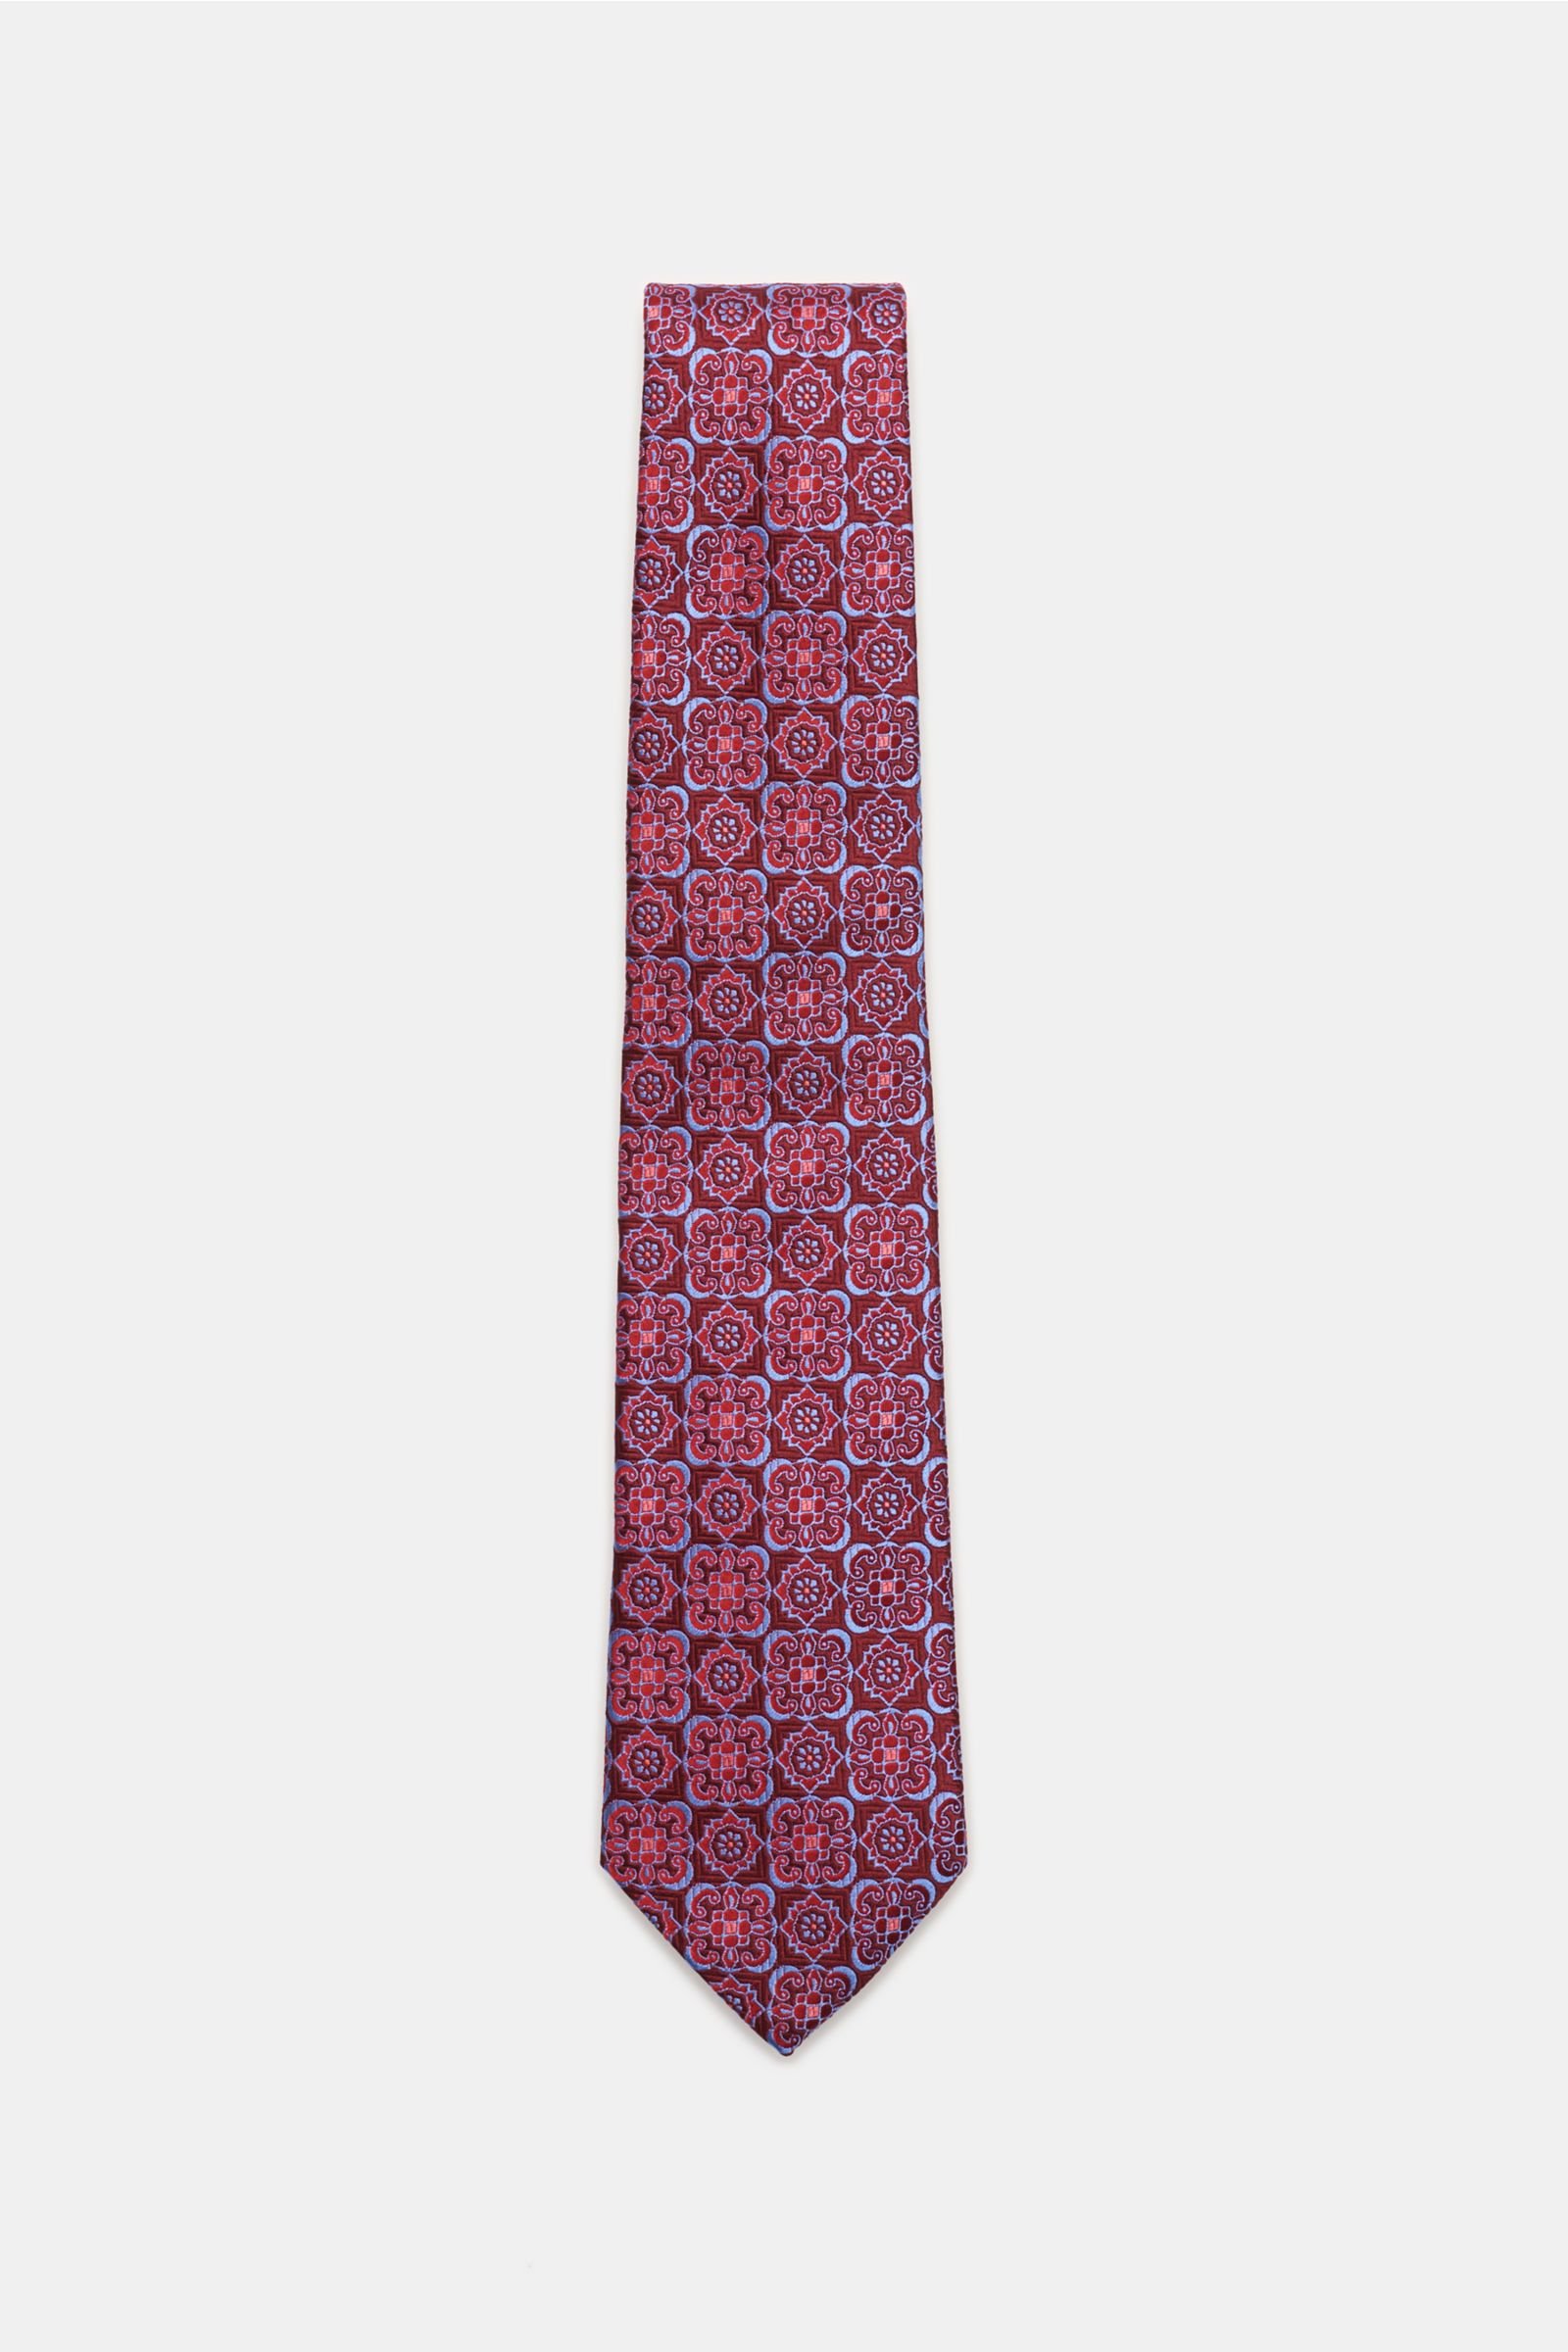 Silk tie dark red/smoky blue patterned